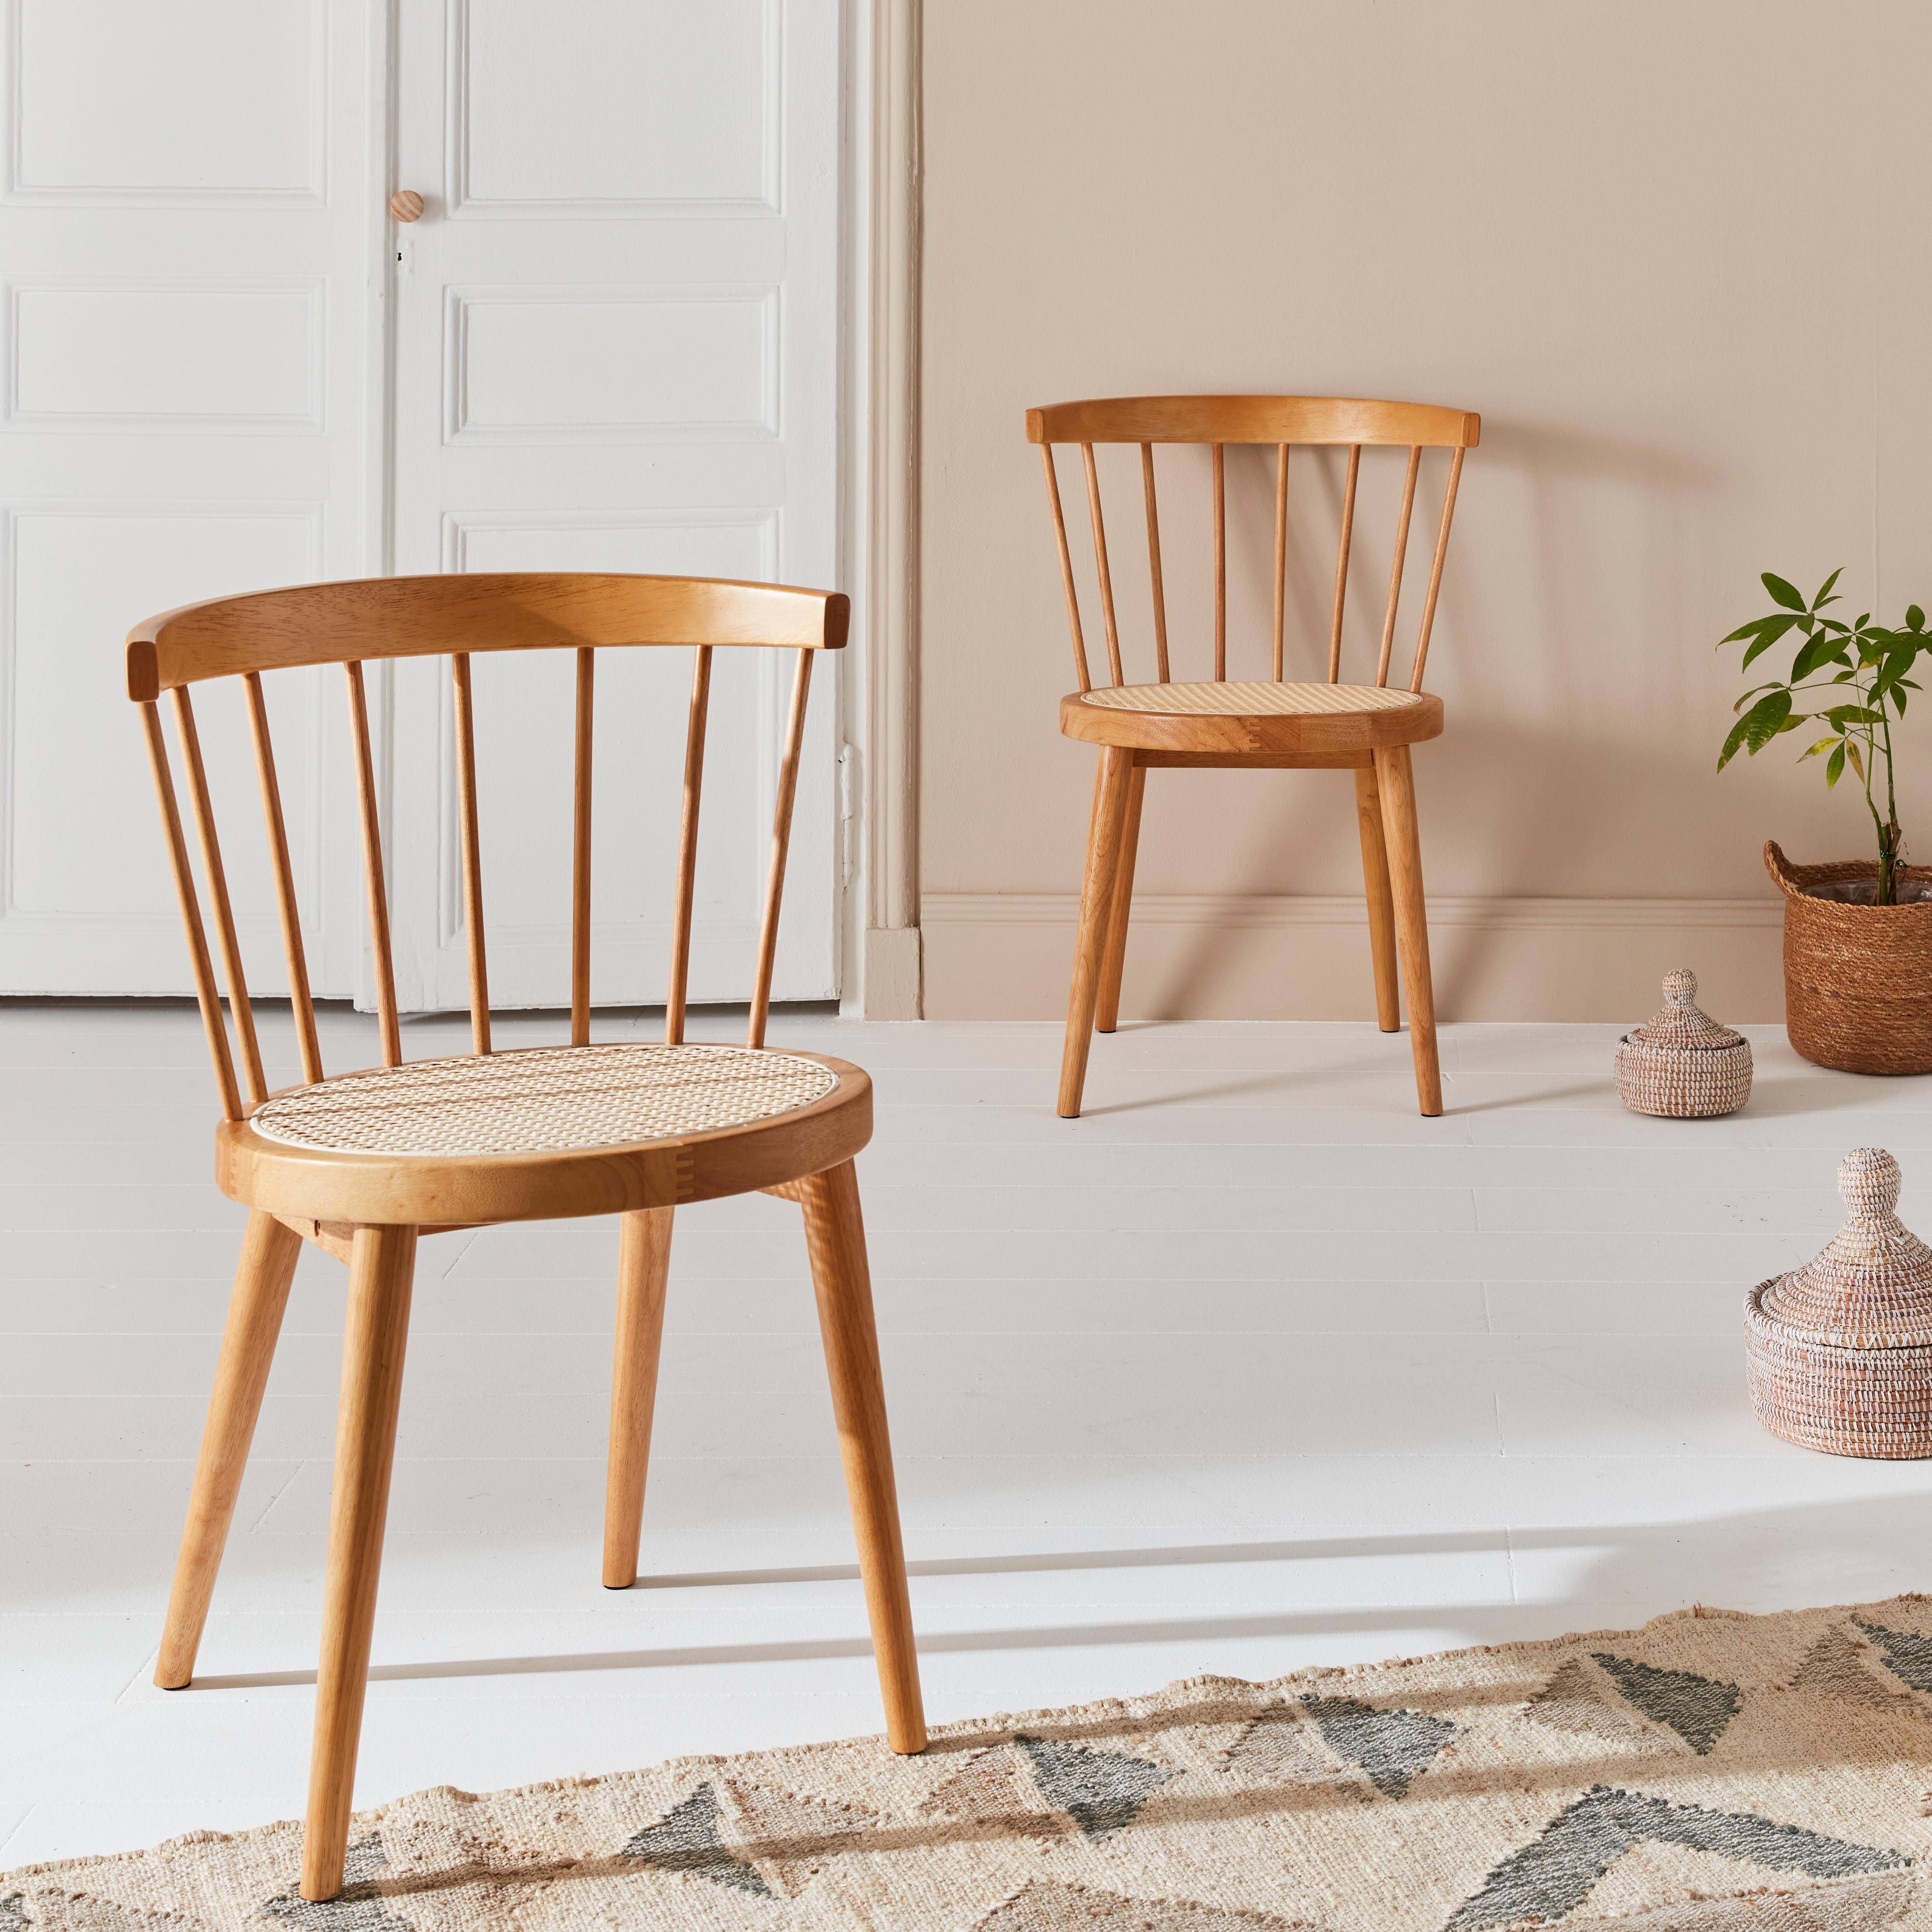 Pair of  Wood and Cane Chairs, Bohemian Spirit, Natural, L53 x W53.5 x H 6 cm,sweeek,Photo1